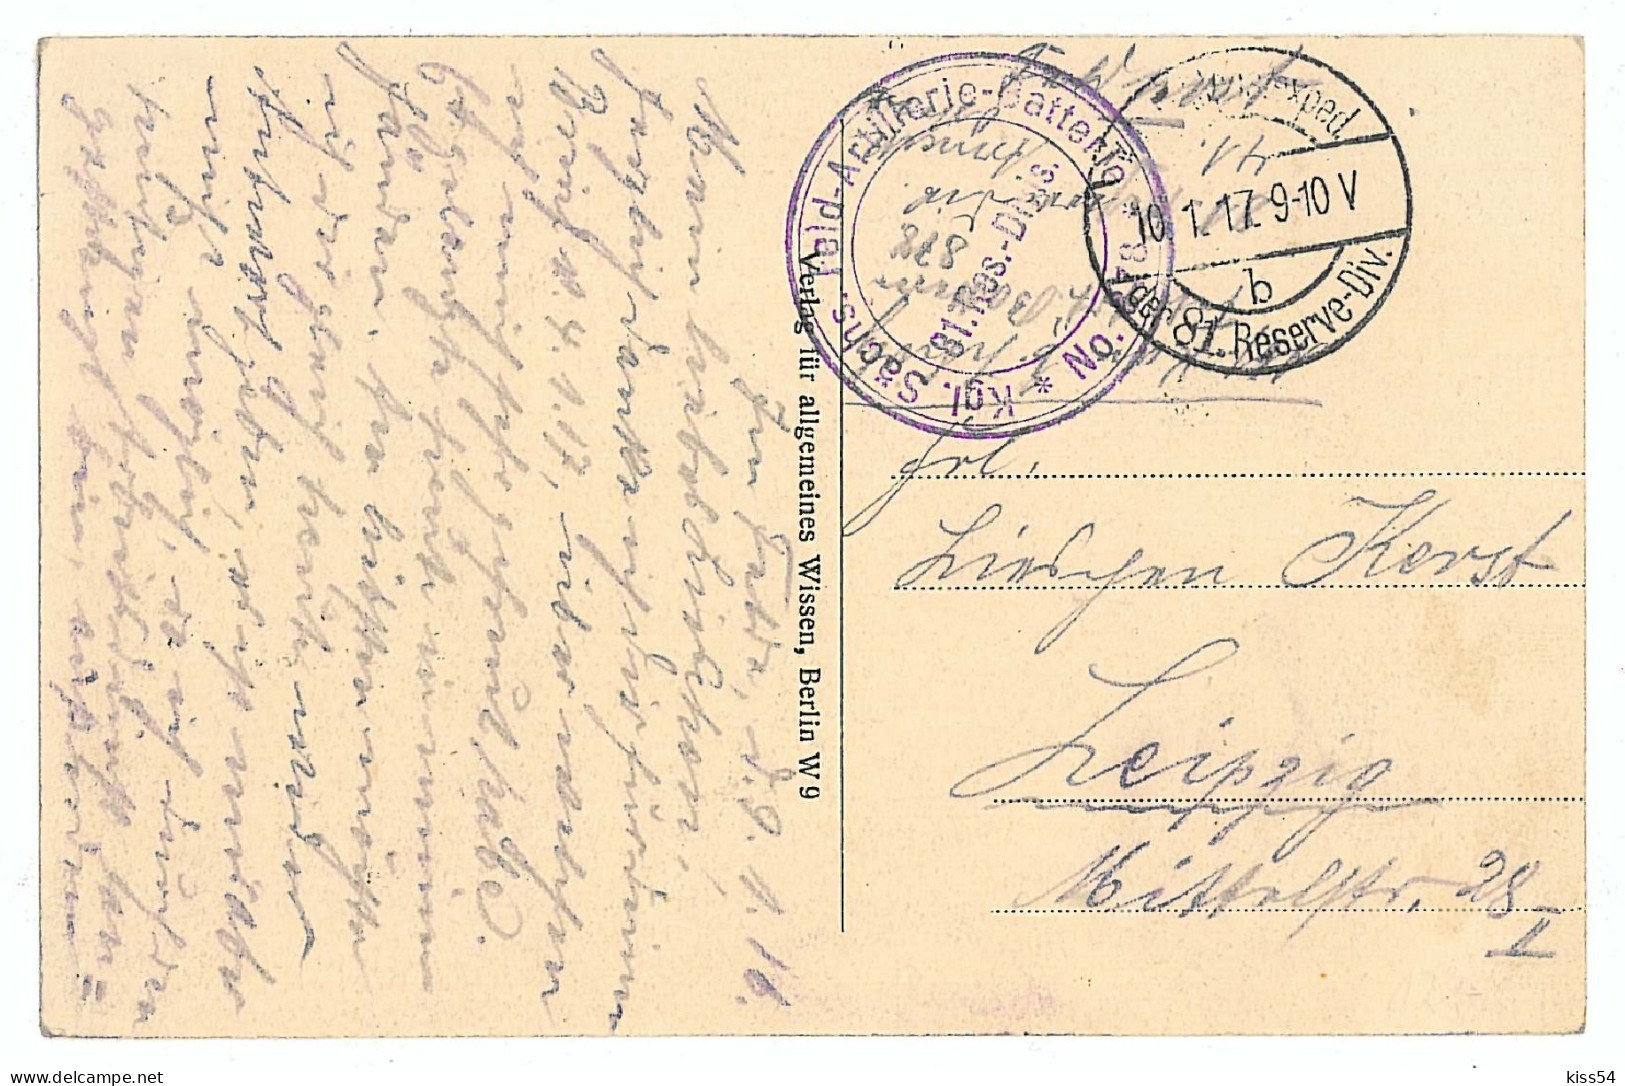 BL 10 - 8309 PINSK, Kiew Street - Old Postcard, CENSOR - Used - 1917 - Belarus